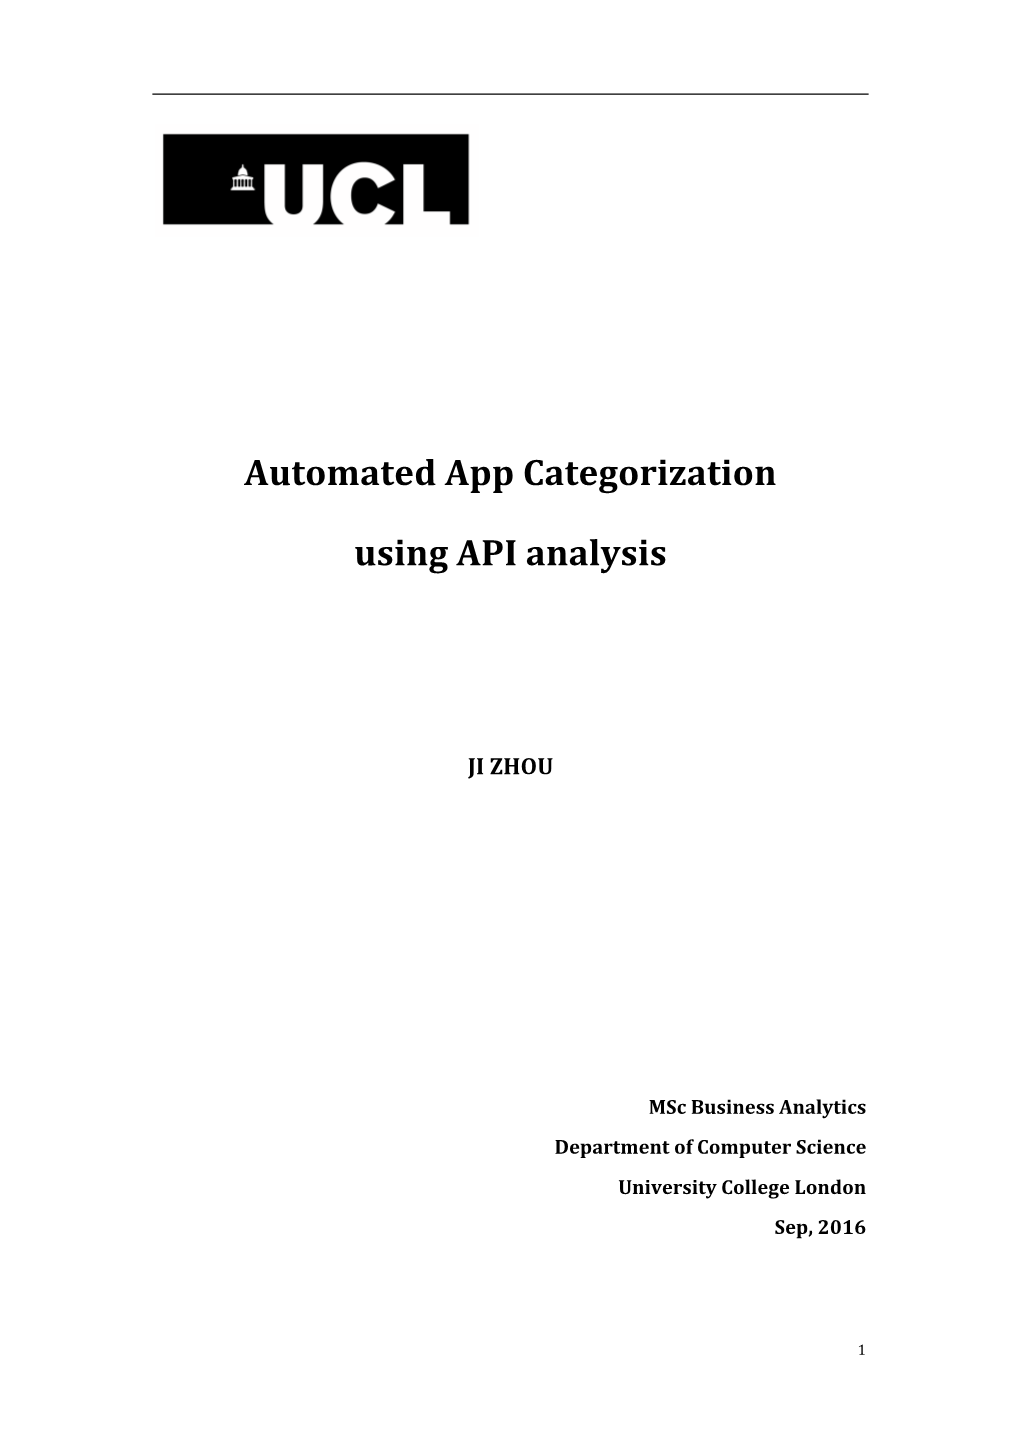 Automated App Categorization Using API Analysis